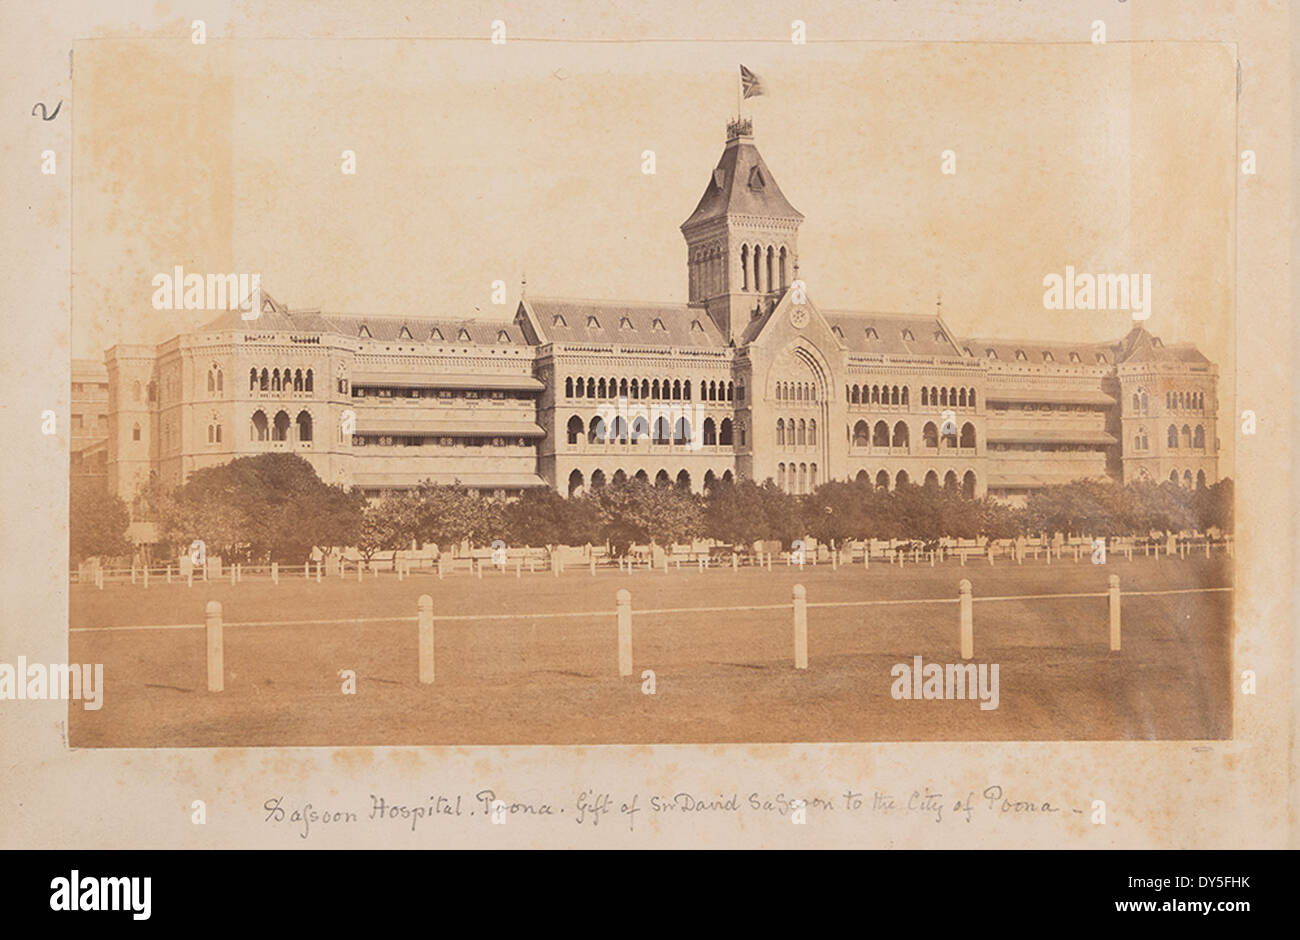 Sassoon Hospital, Poona. Gift of Sir David Sassoon to the City of Poona. Stock Photo